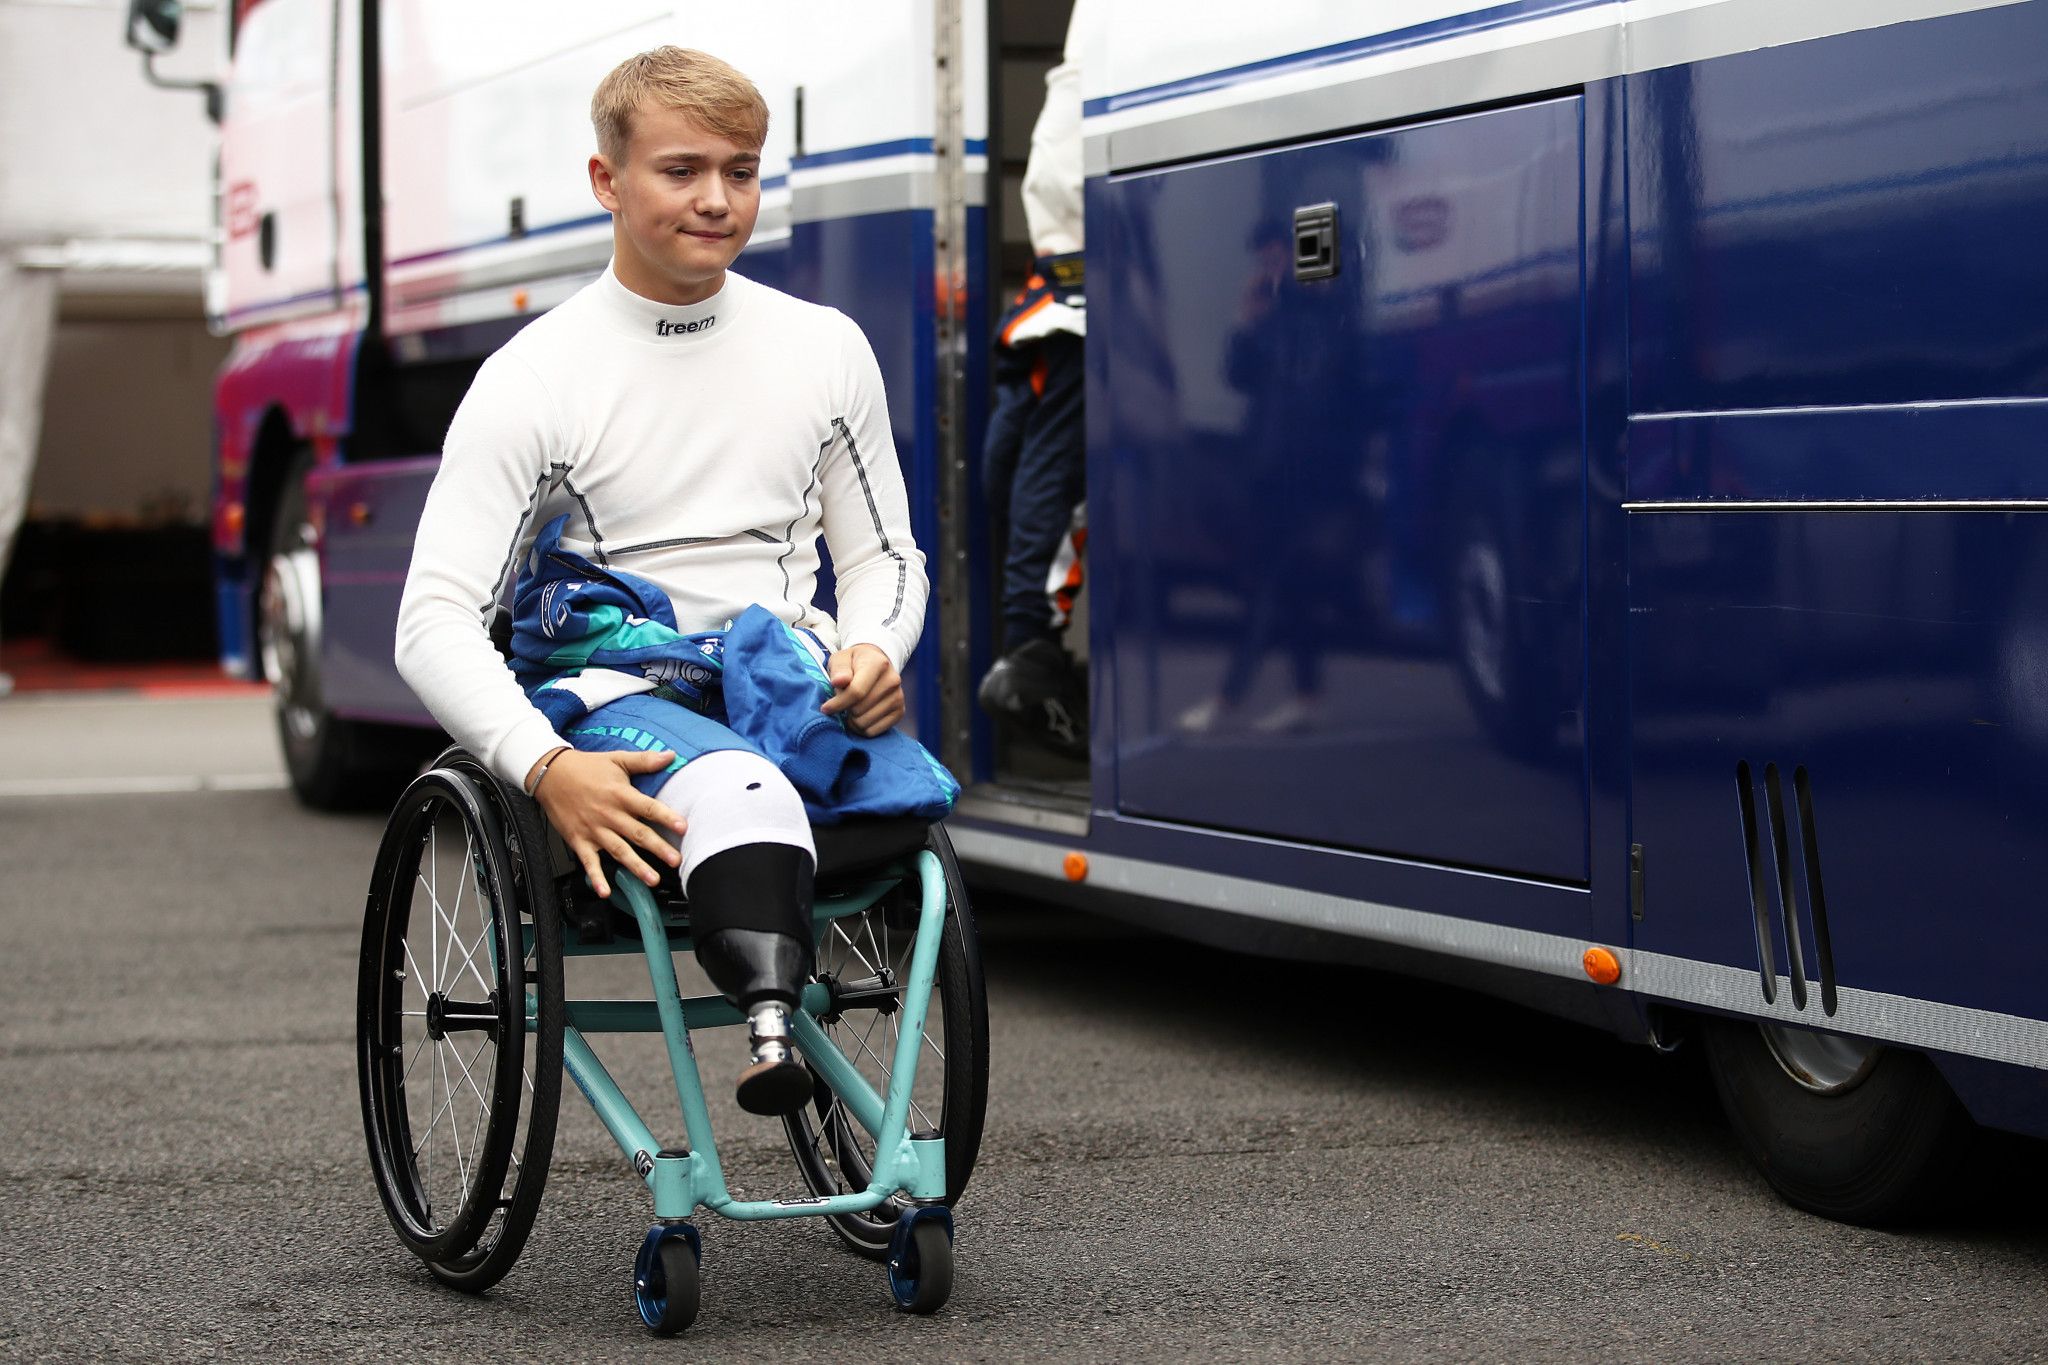 Racing driver and TV presenter Monger stars in wheelchair tennis documentary series